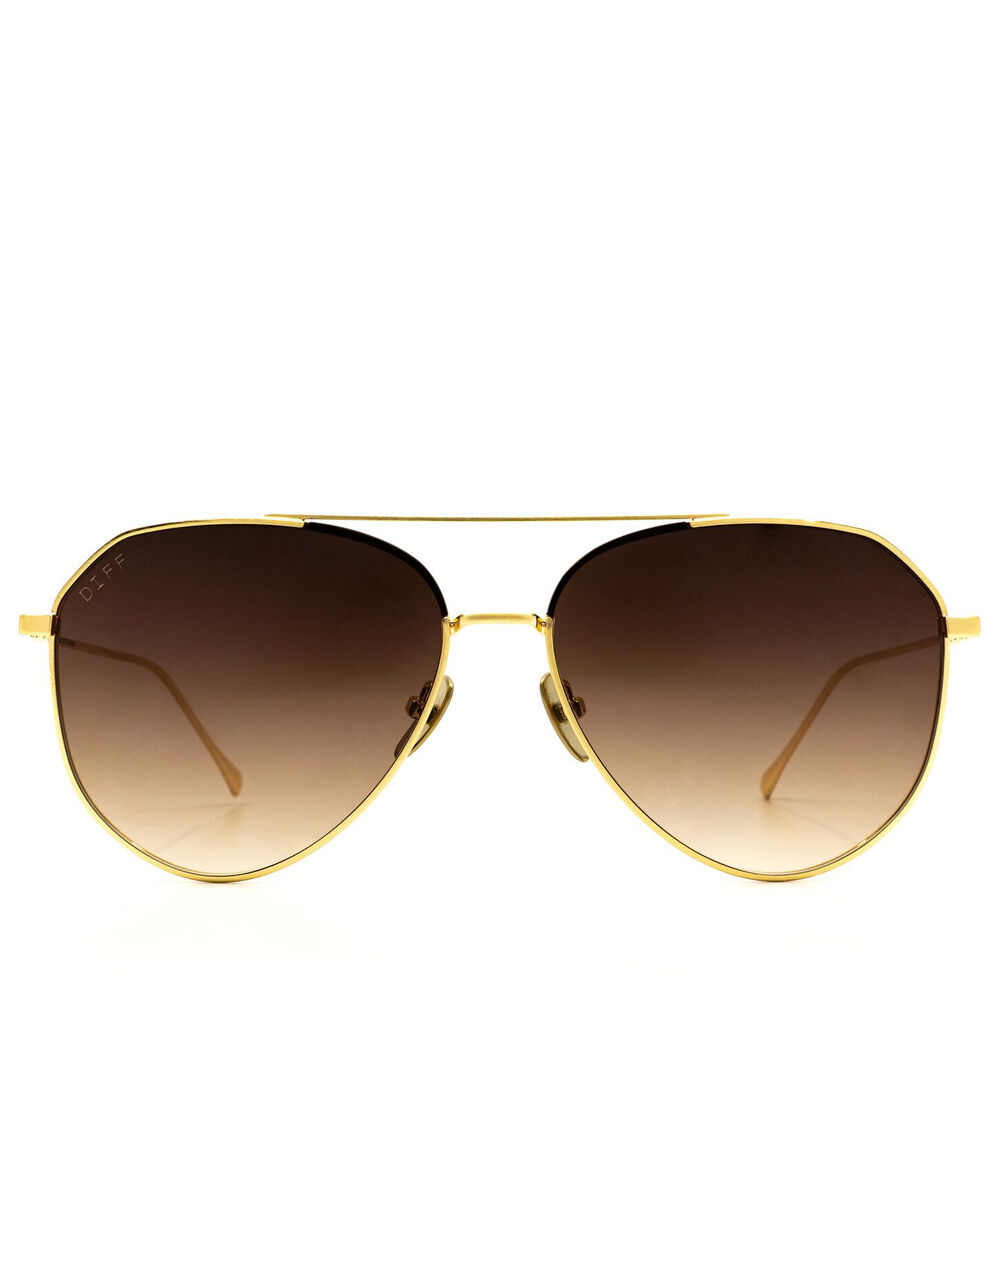 DIFF EYEWEAR Brooks Gold & Brown Gradient Sunglasses - GOLD | Tillys